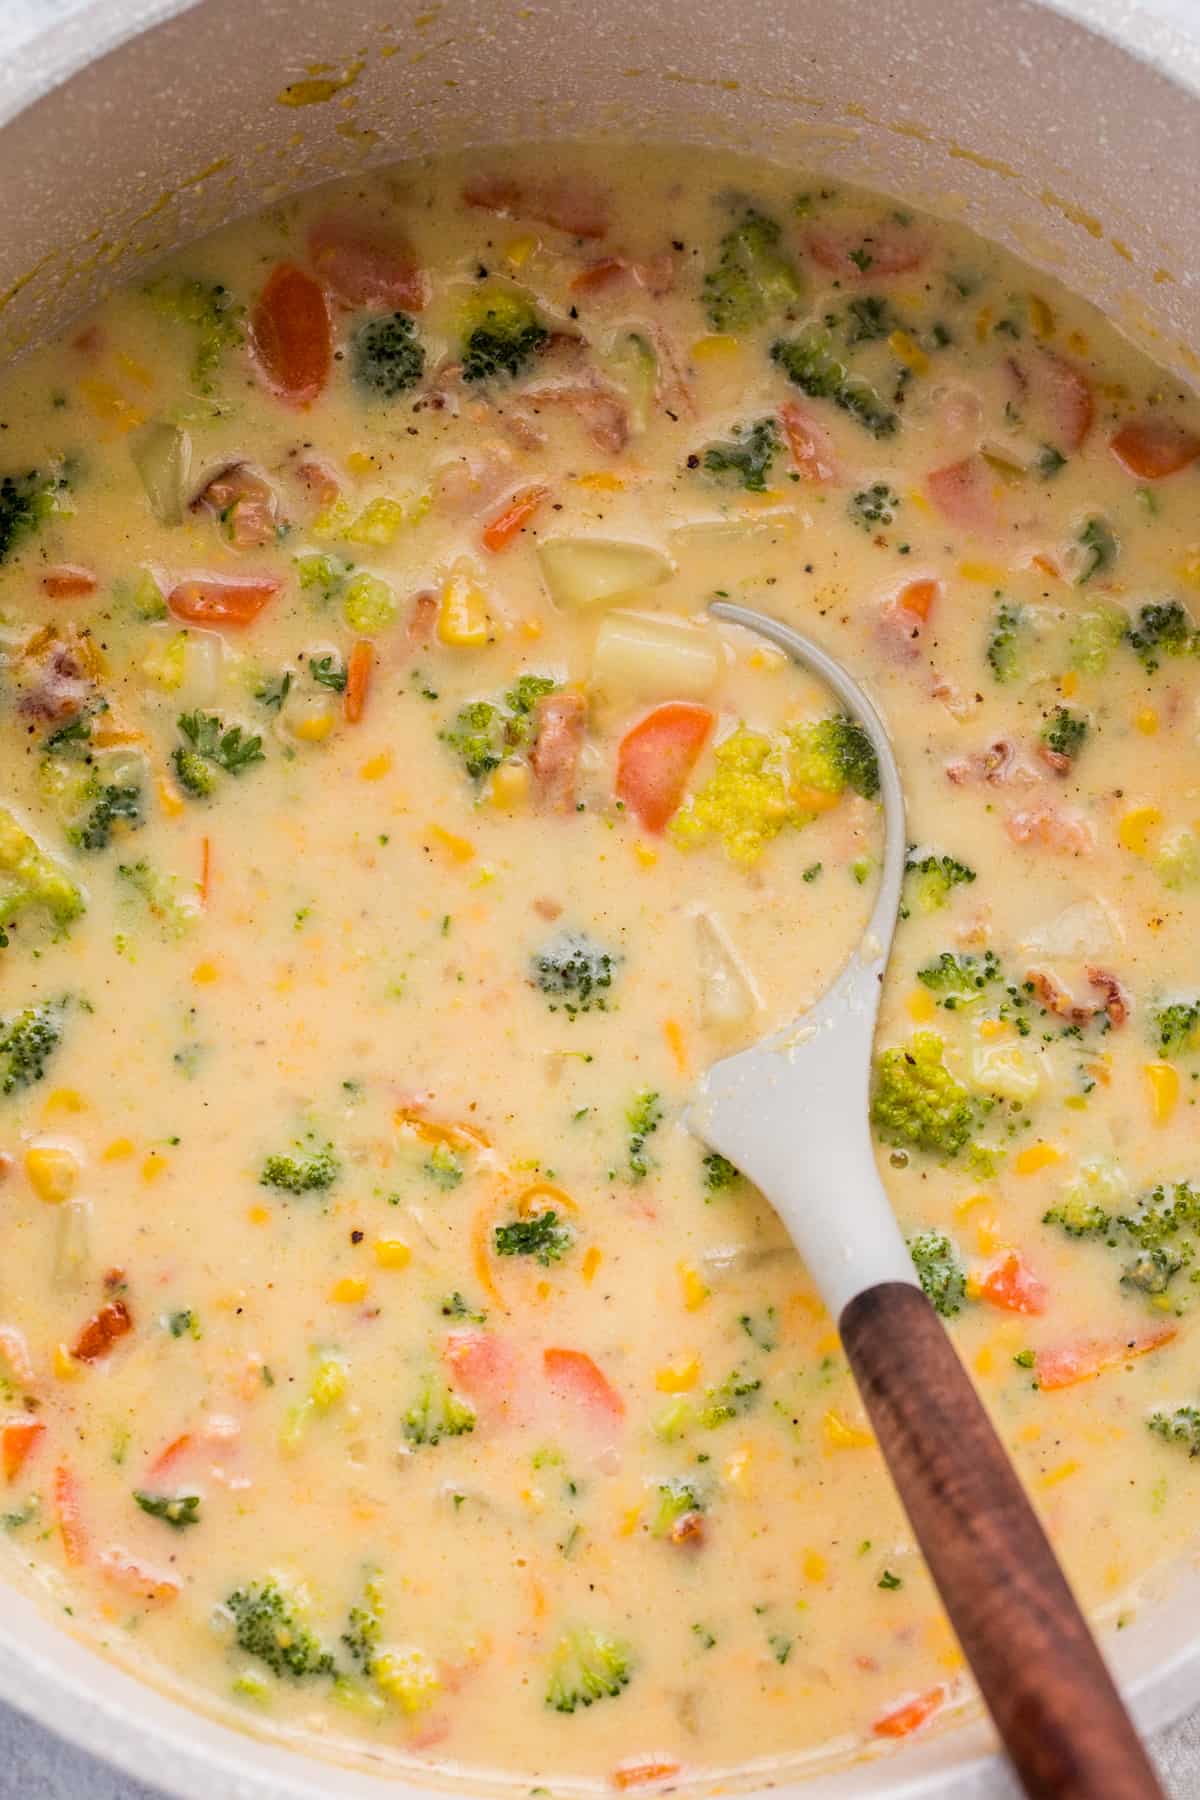 pirates voyage creamy vegetable soup recipe